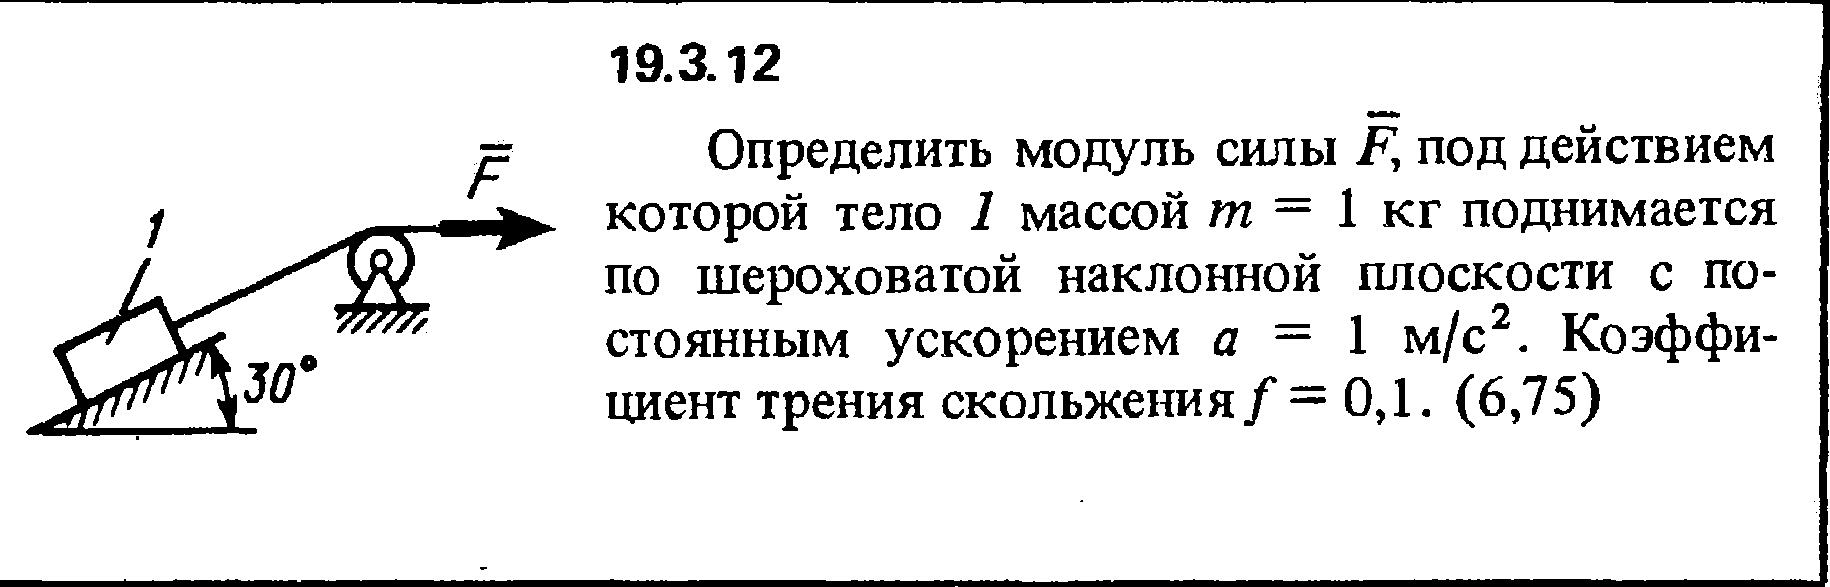 Решение 19.3.12 из сборника (решебника) Кепе О.Е. 1989